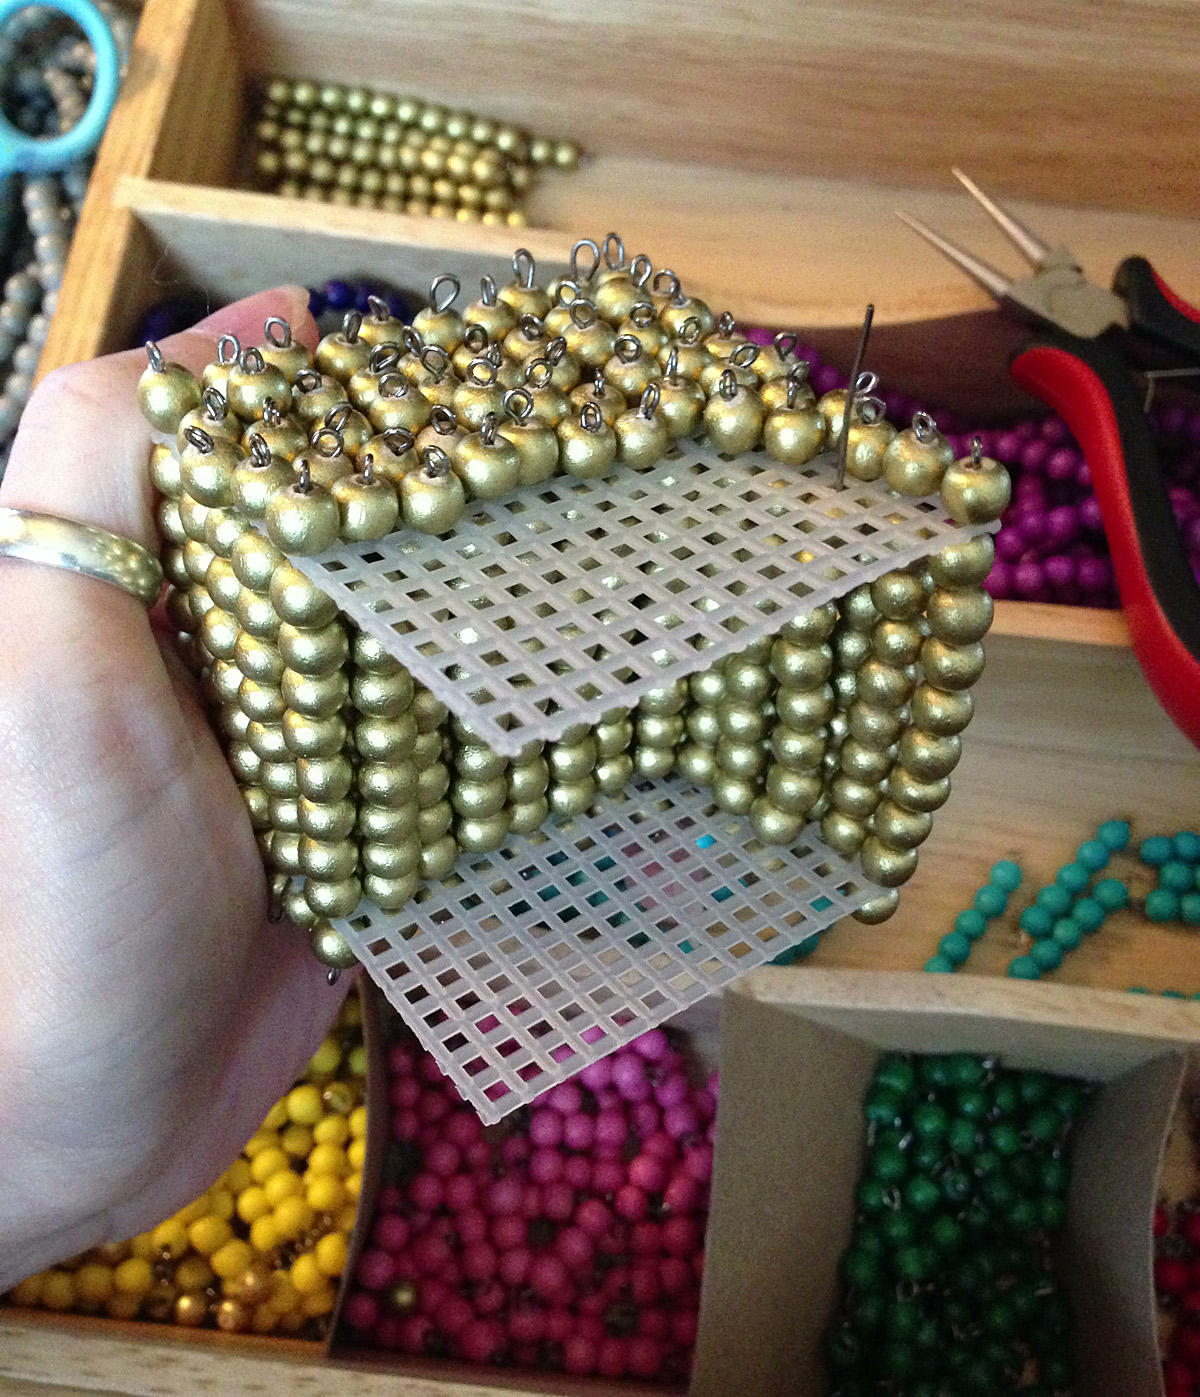 Thousand Chain Golden Bead Chain of 1000 NEW Montessori Mathematics Material 